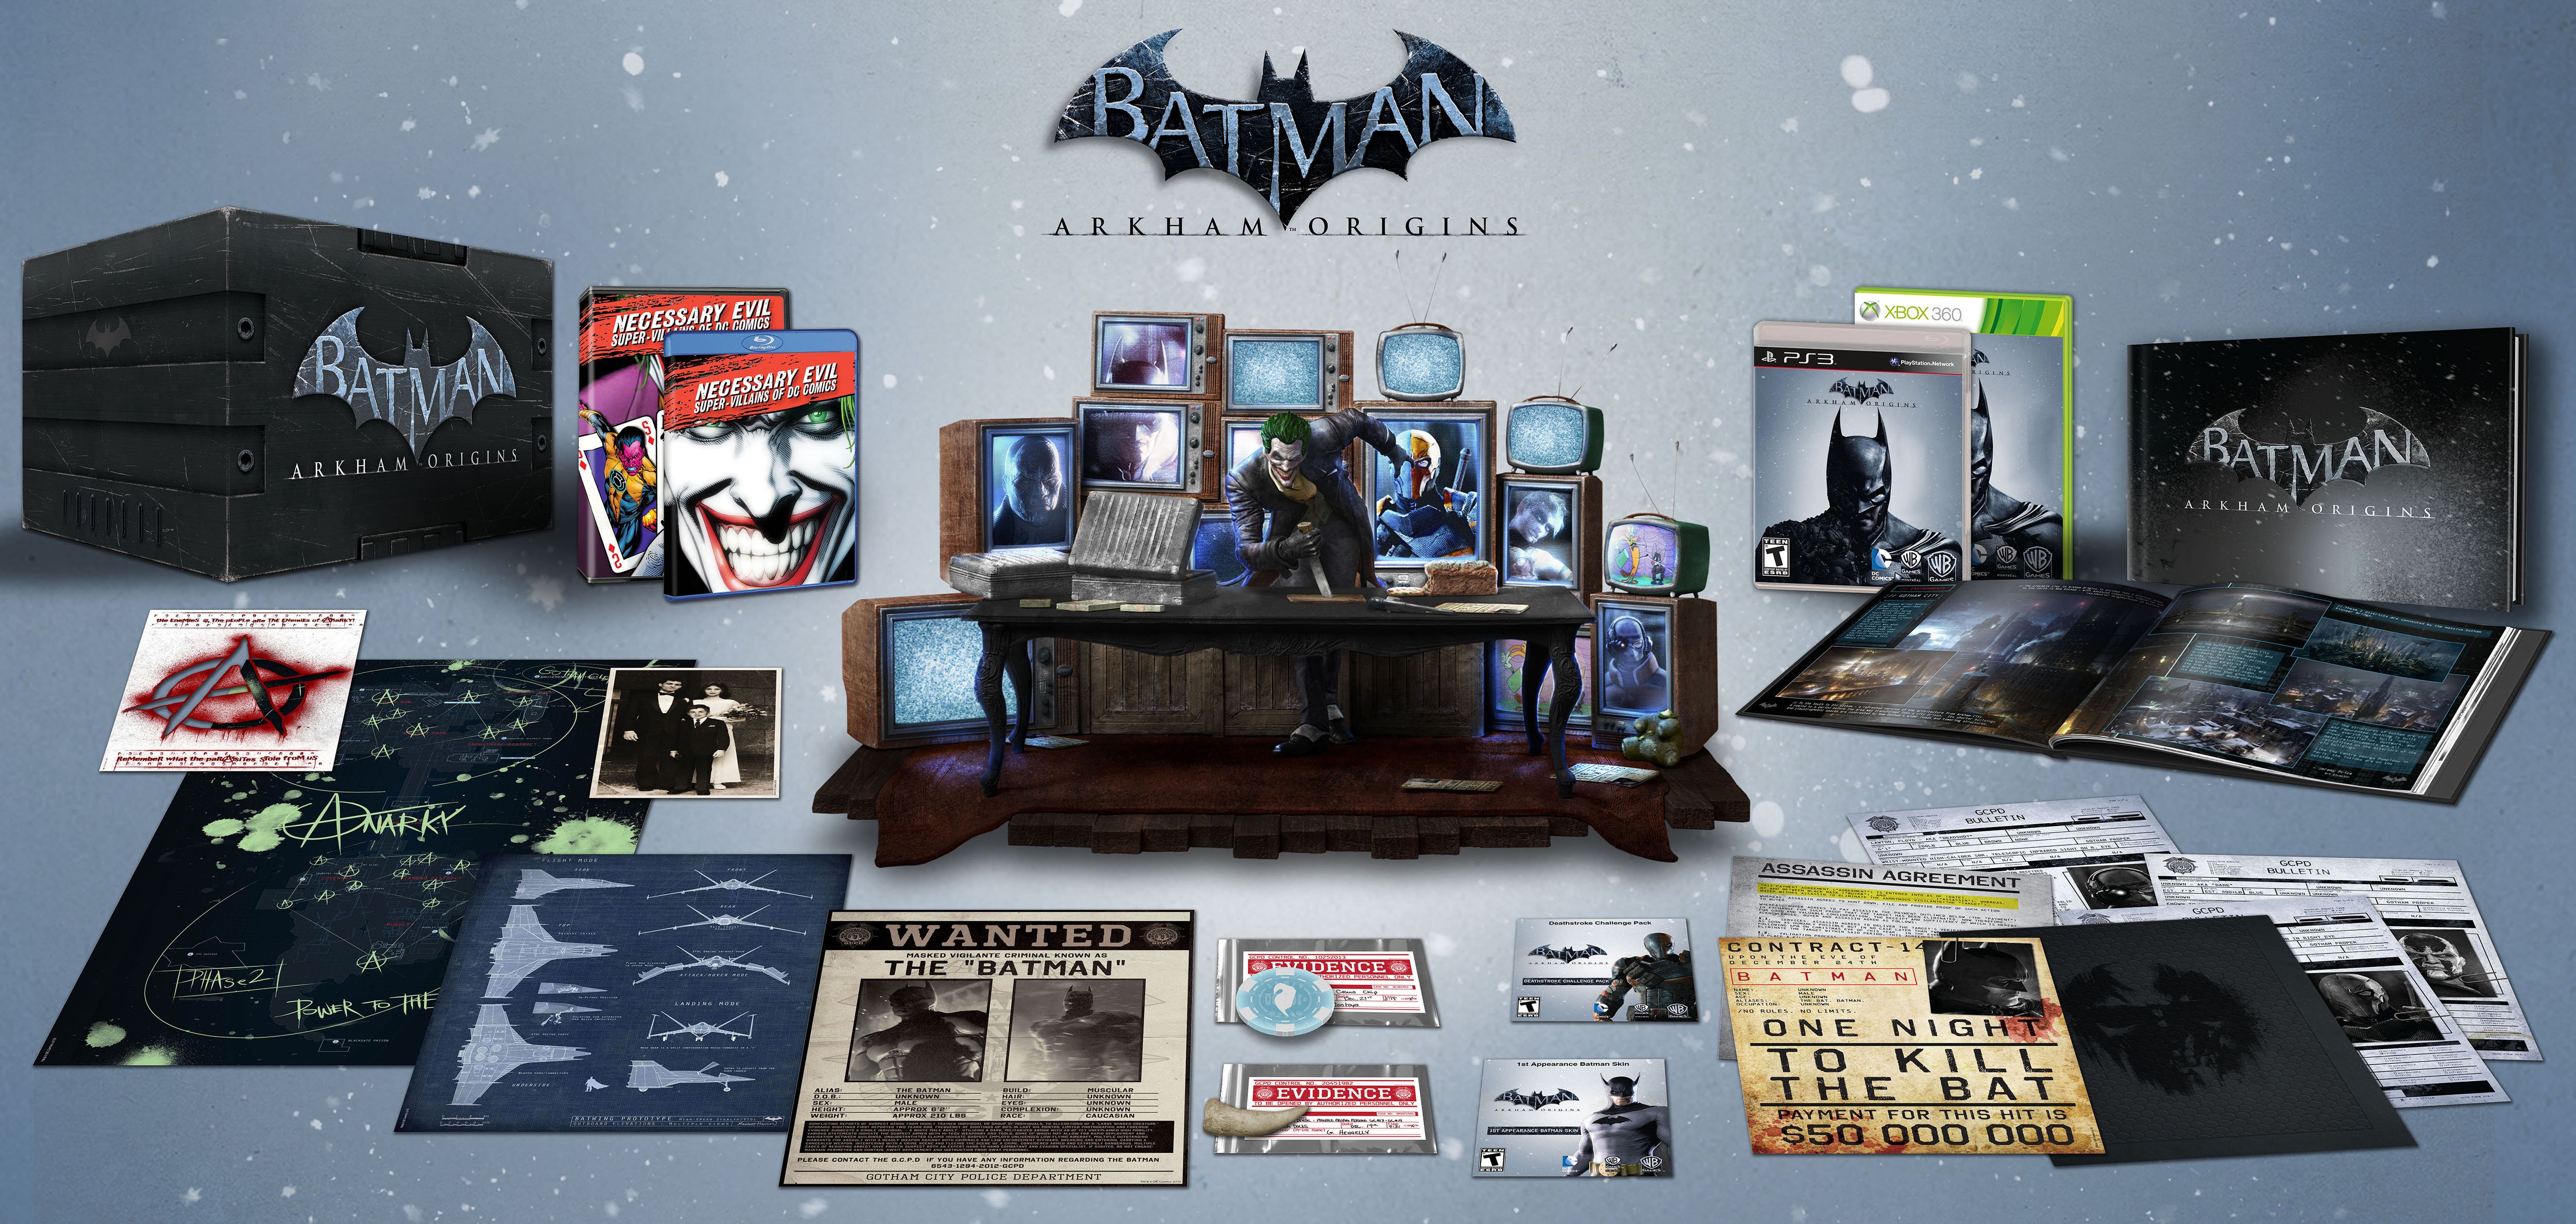 Collector's Edition Europea de Batman Arkham Origins Anunciada. - MasGamers